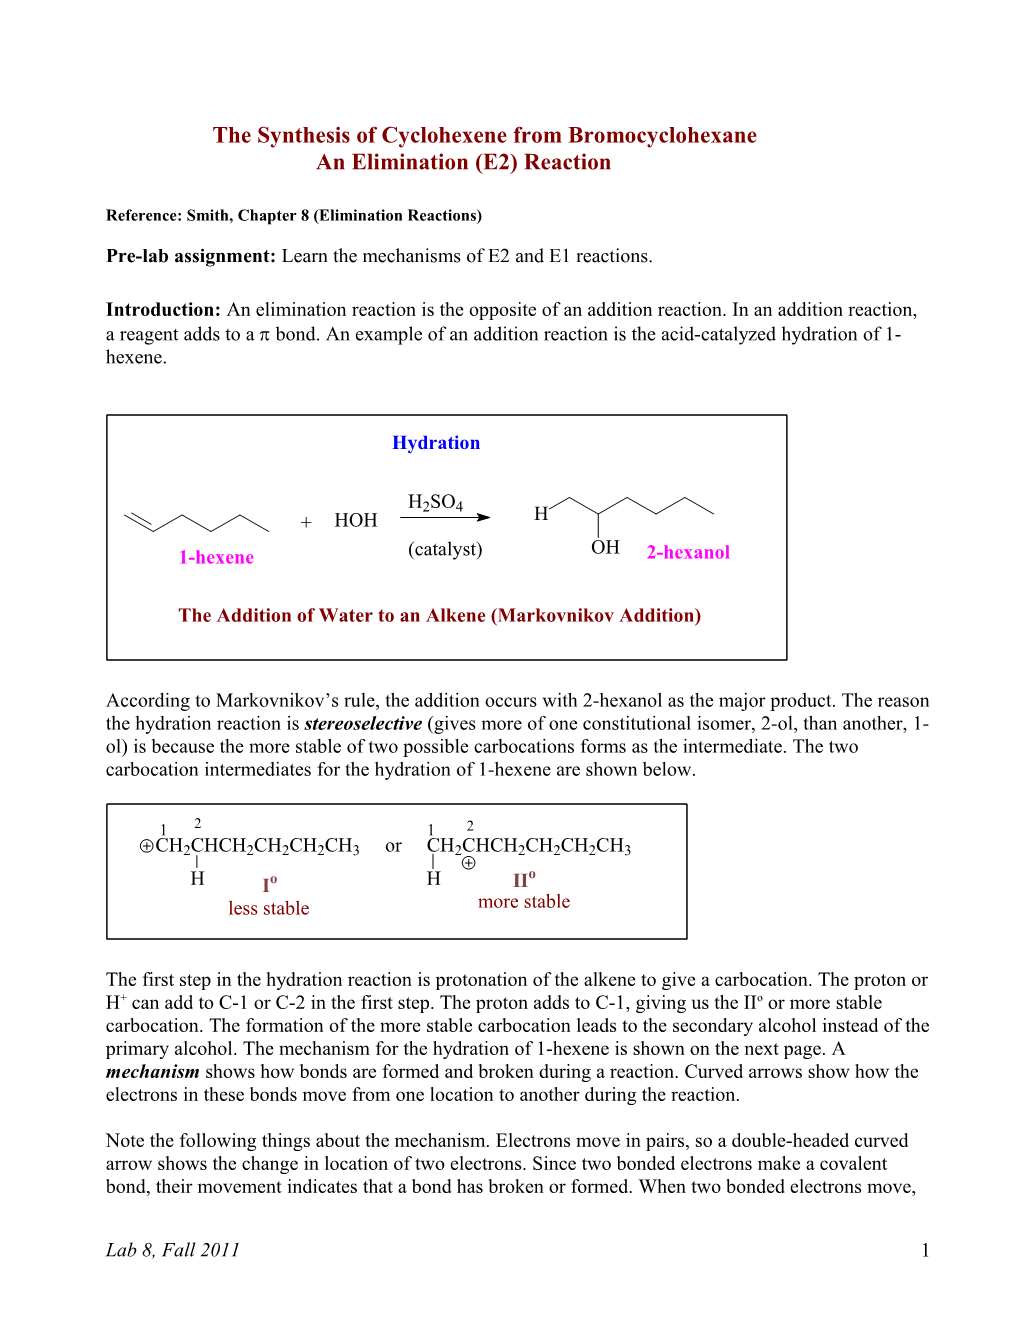 The Synthesis of Cyclohexene from Bromocyclohexane